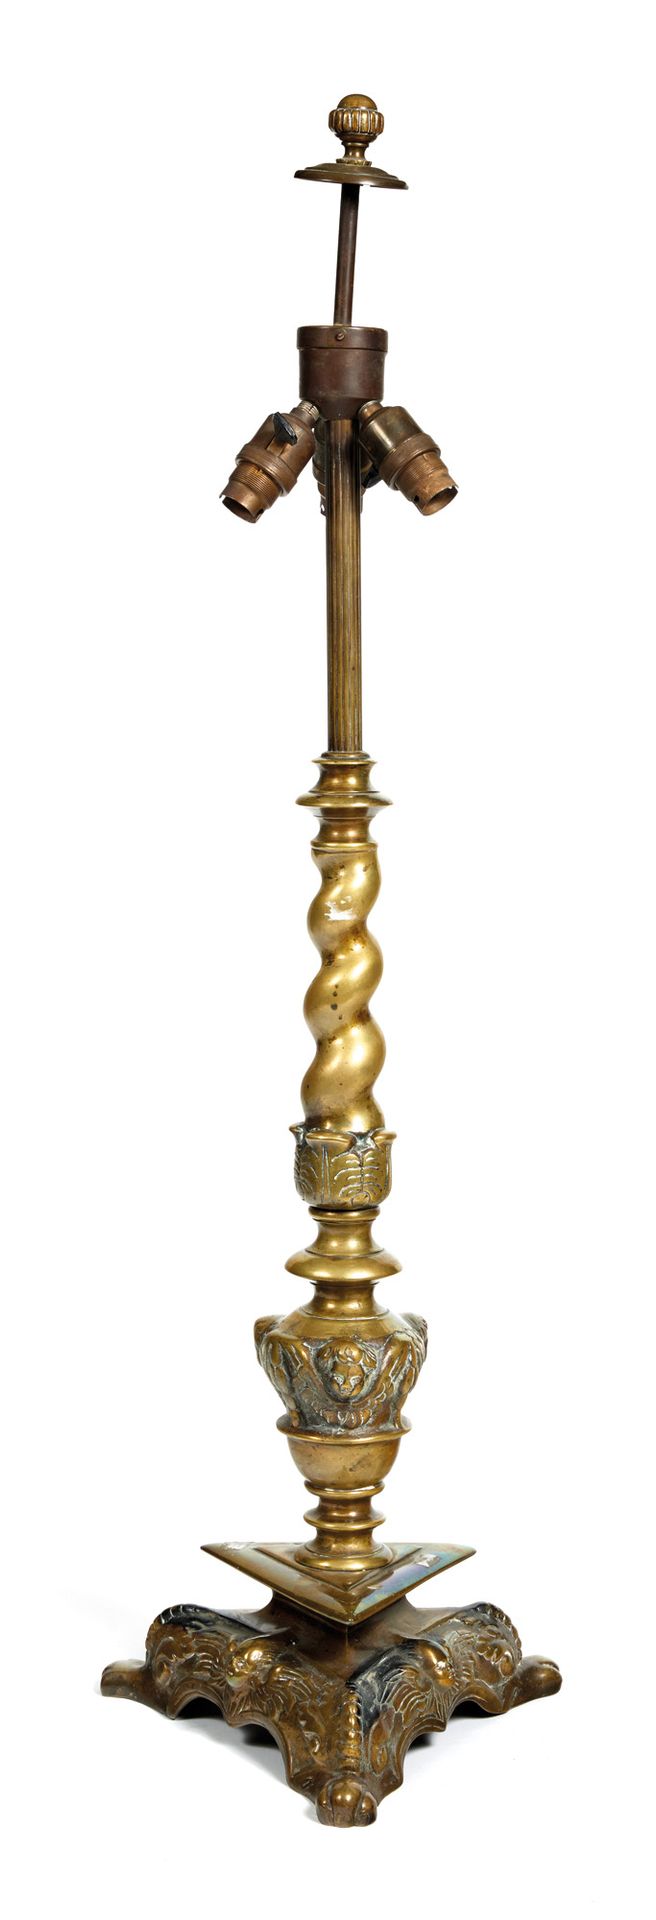 Pique-cierge Pique-cierge

in gilded bronze, torso column and triangular base wi&hellip;